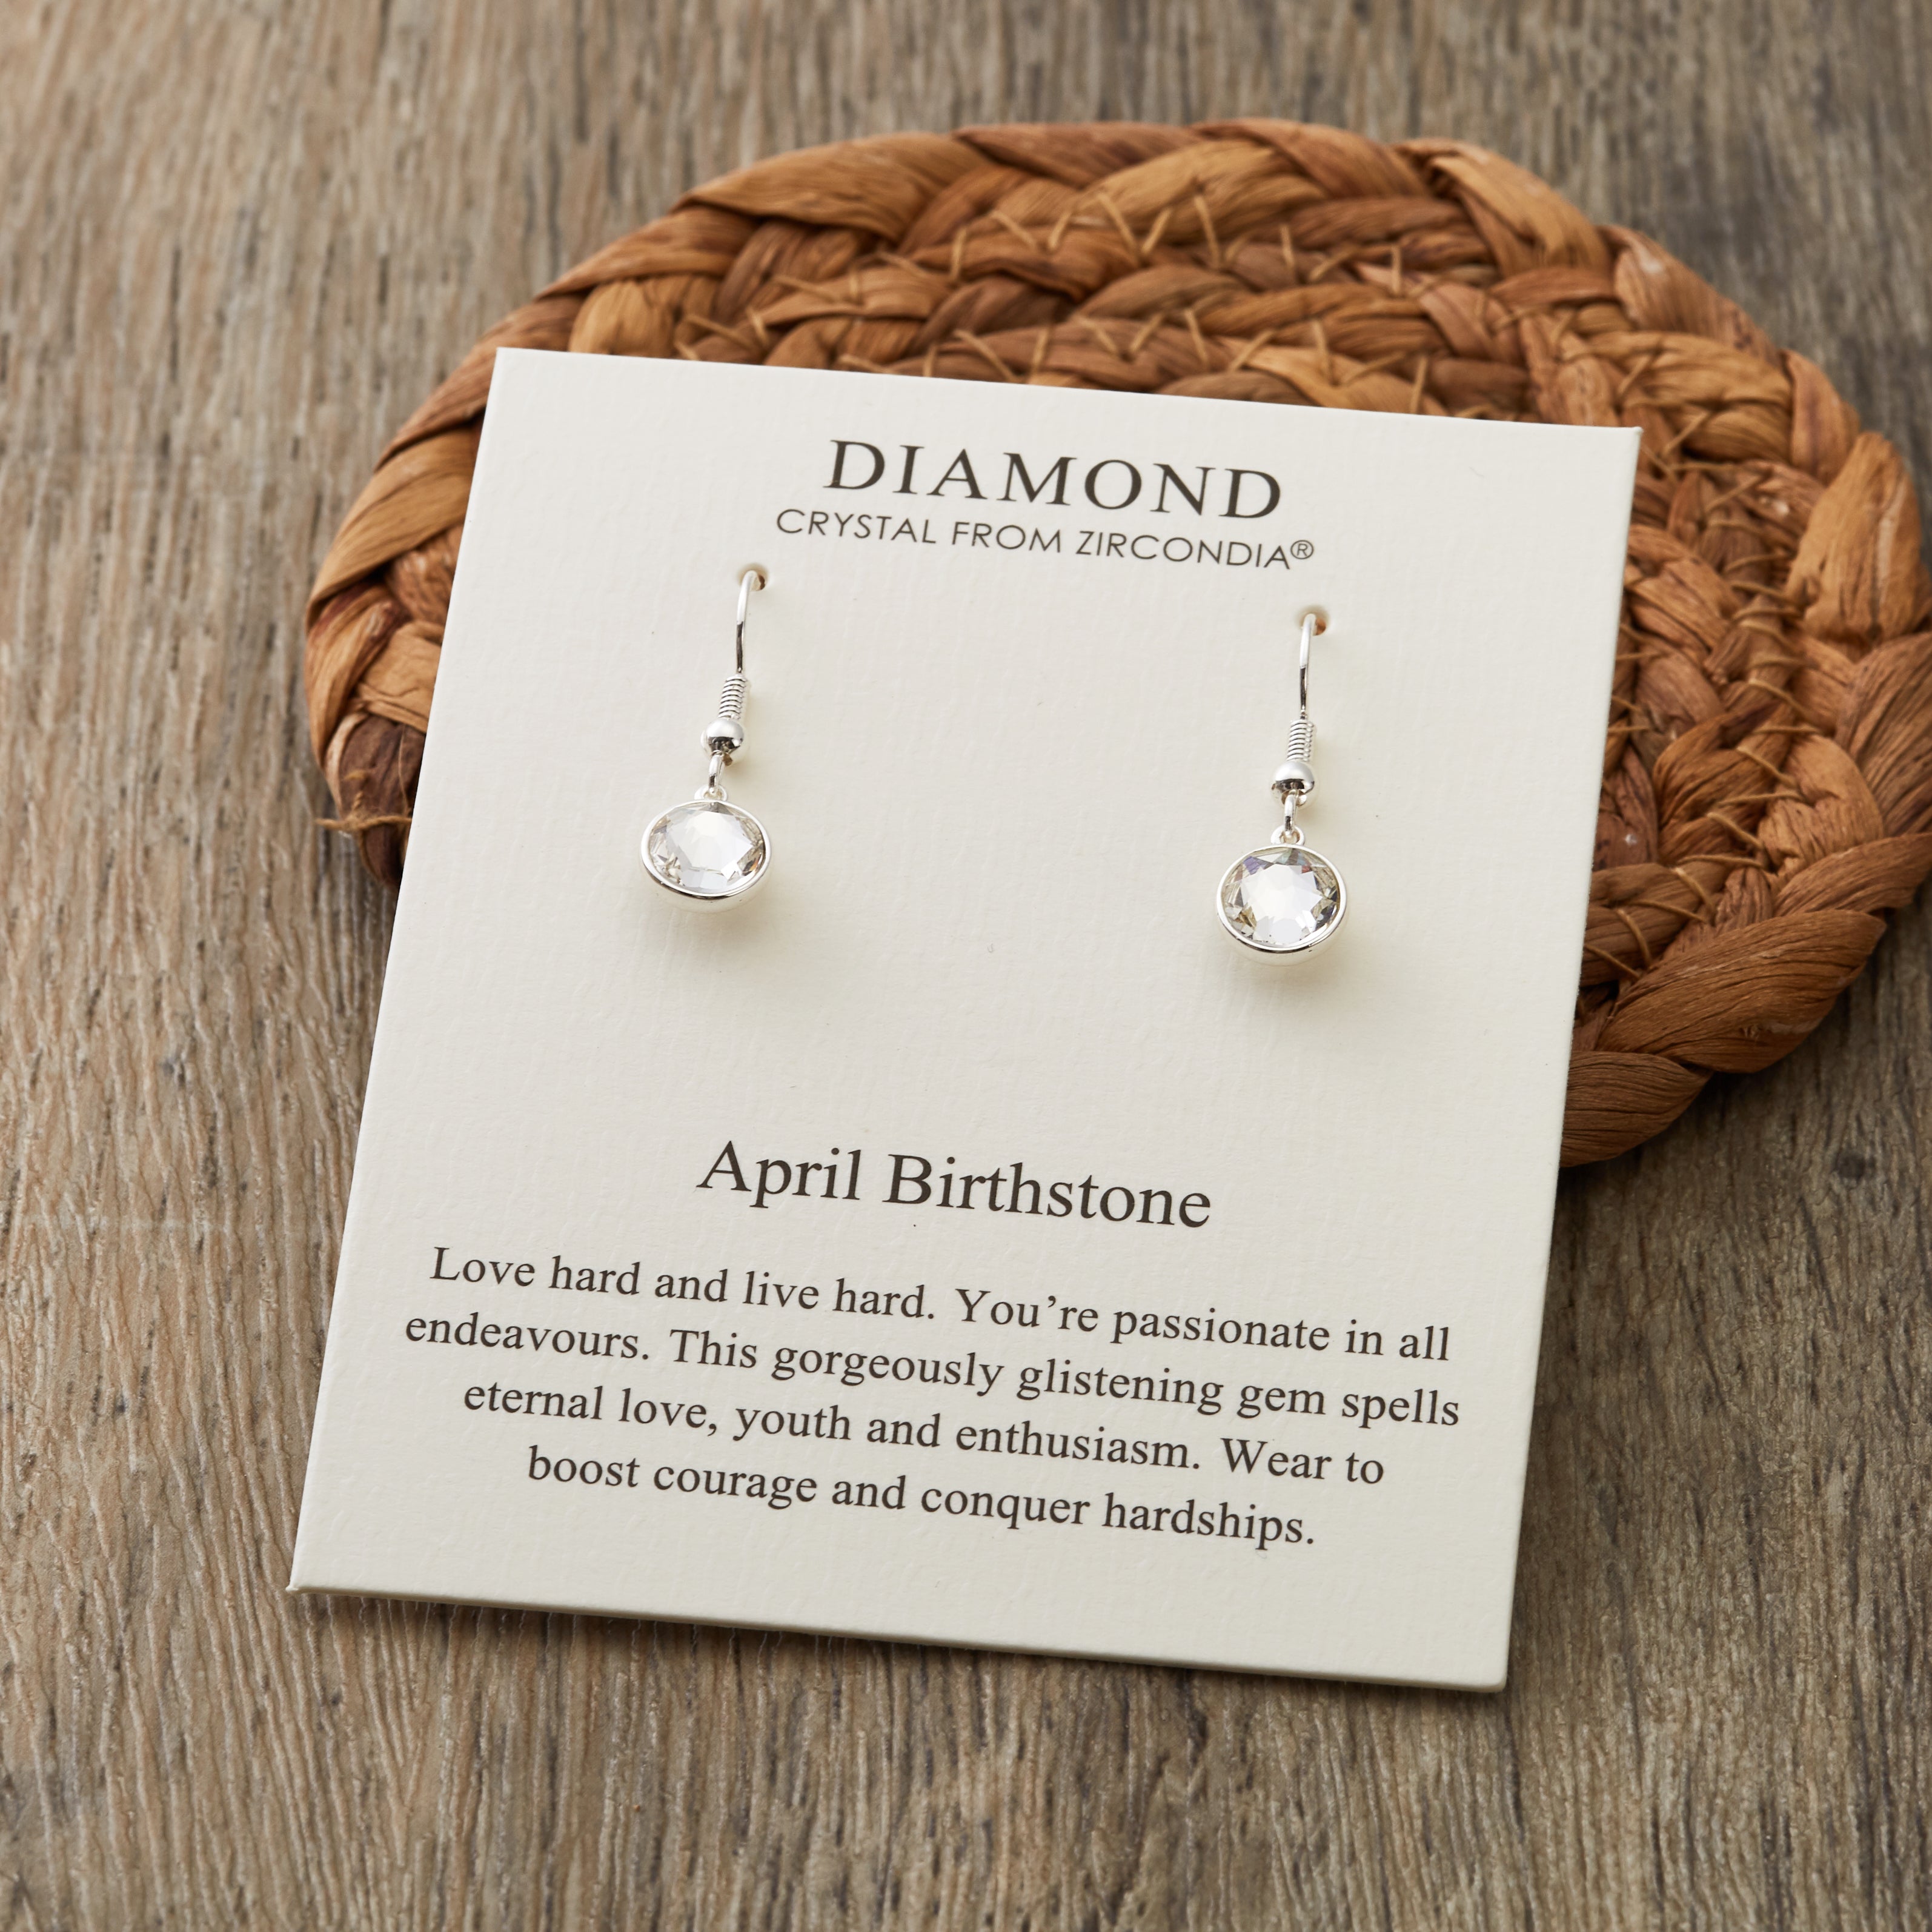 April Birthstone Drop Earrings Created with Diamond Zircondia® Crystals